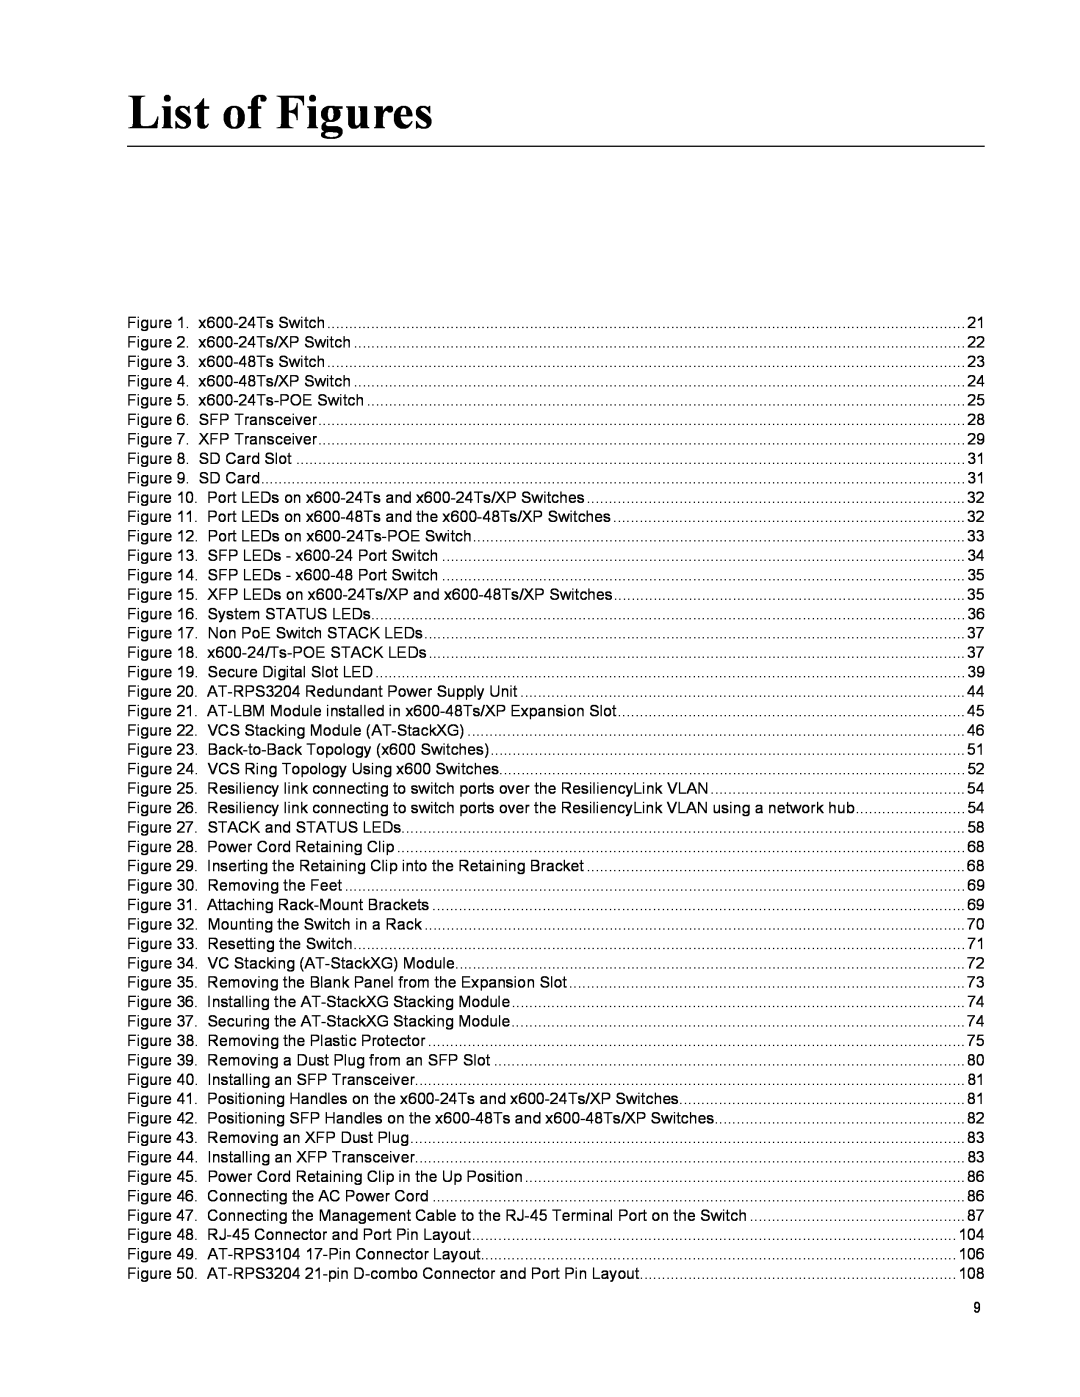 Allied Telesis x600-24Ts-POE manual List of Figures 